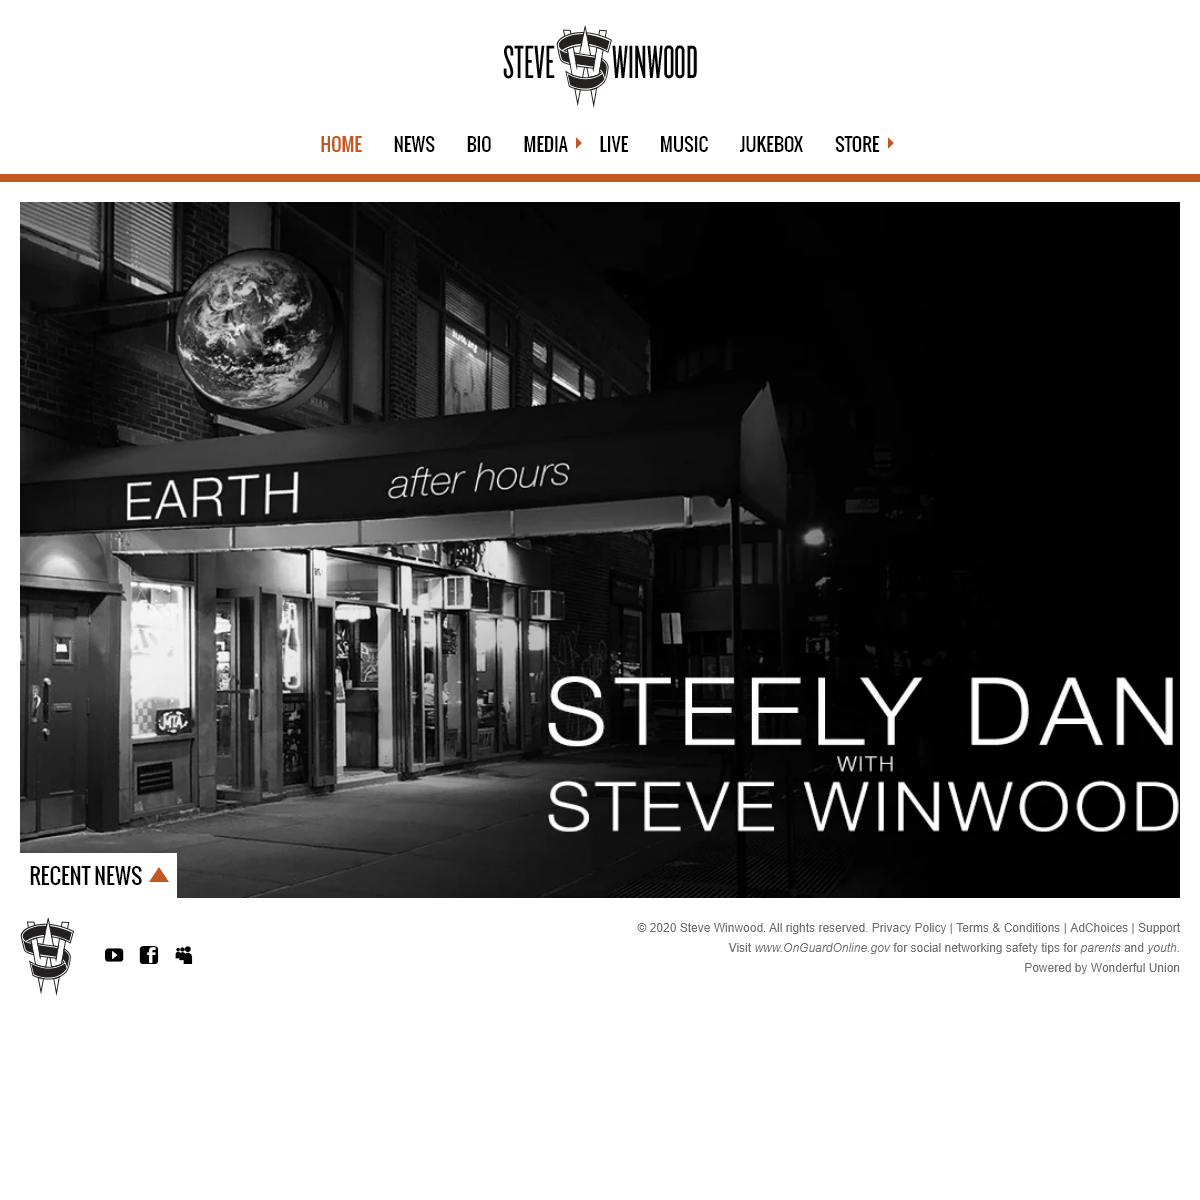 A complete backup of stevewinwood.com